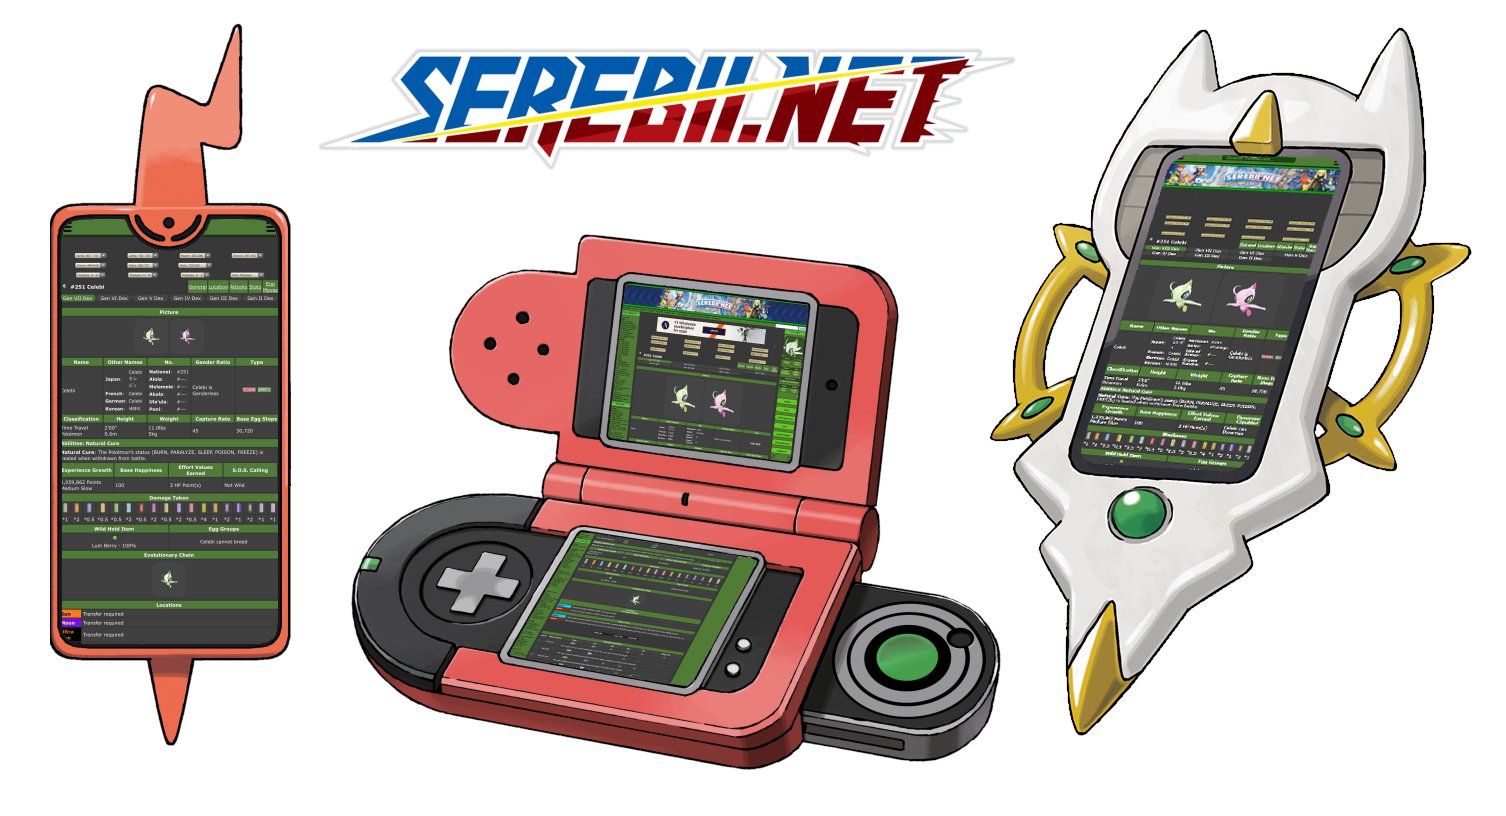 Serebii.net on X: Serebii Update: The Serebii Pokédex and Pokéarth - Sinnoh  sections are now updated with location data for Pokémon Brilliant Diamond &  Shining Pearl Pokédex:  Pokéarth